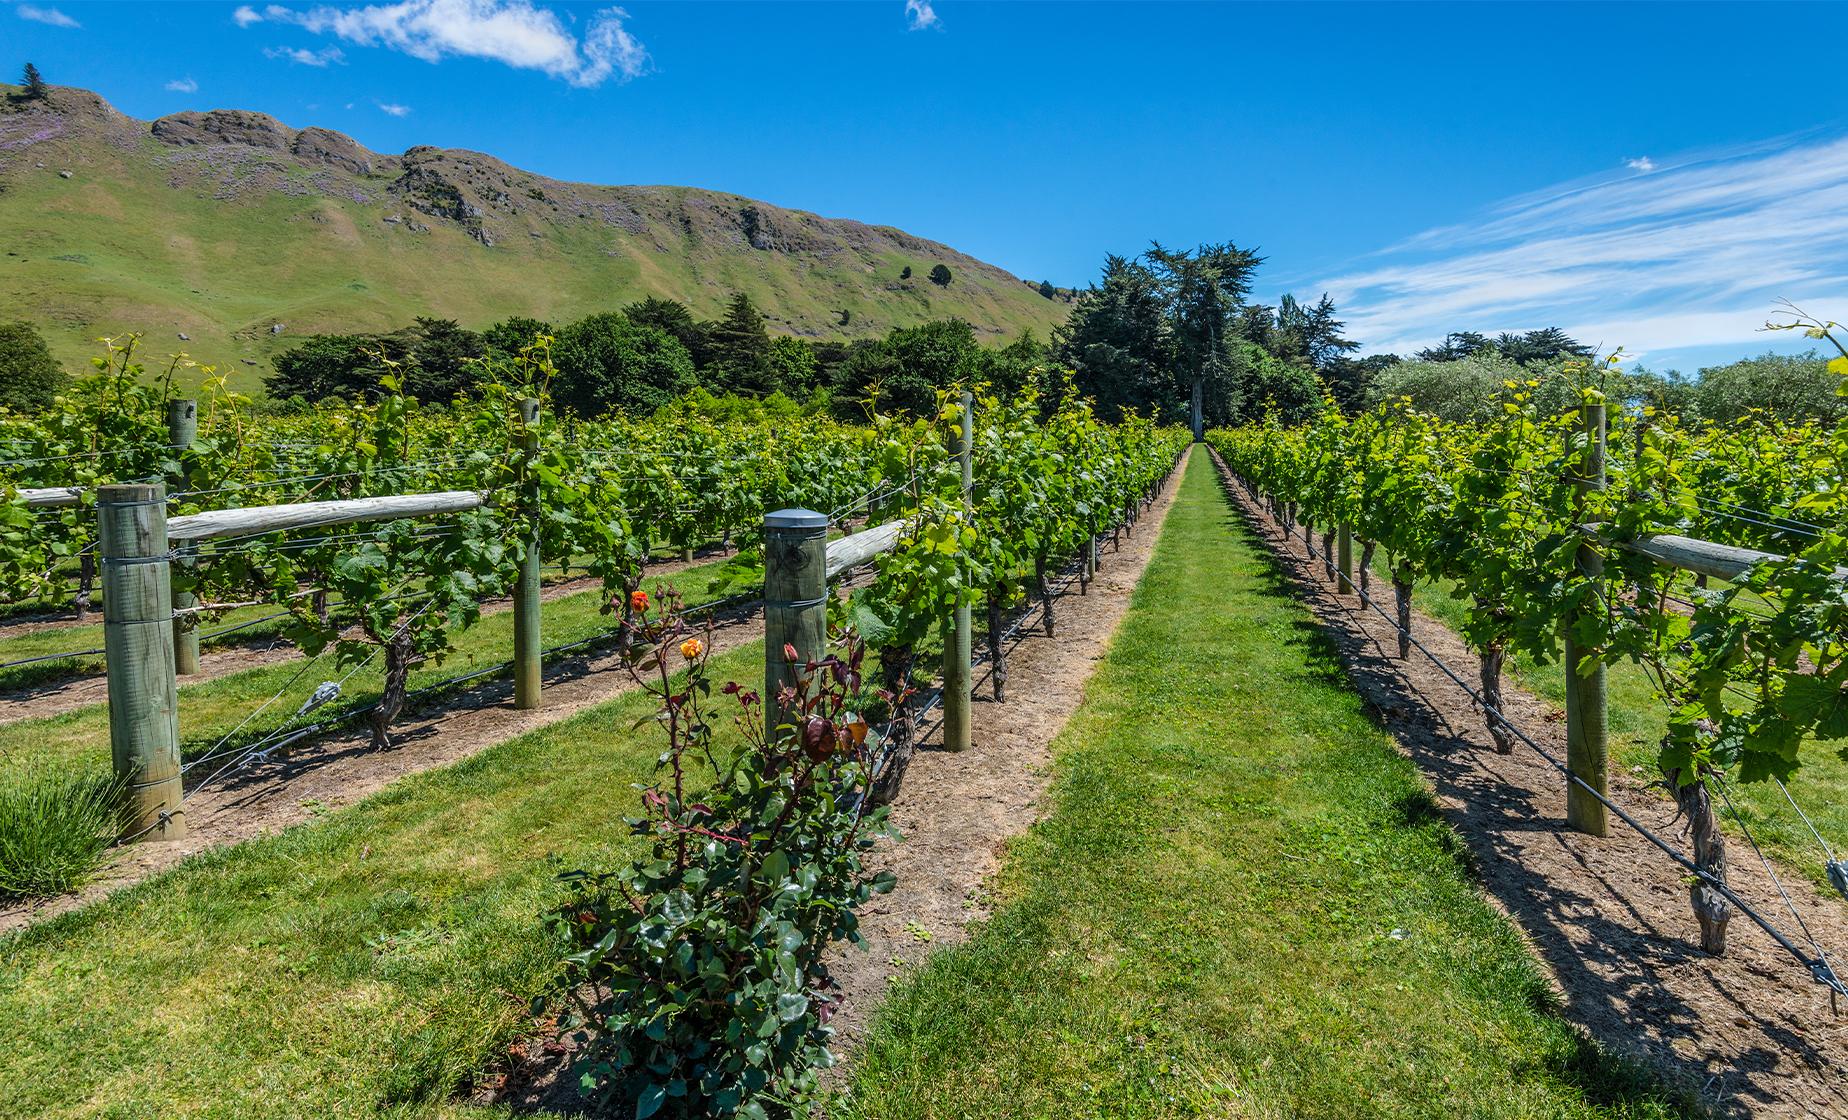 New Zealand Wine Tours: A Journey Through Vineyards